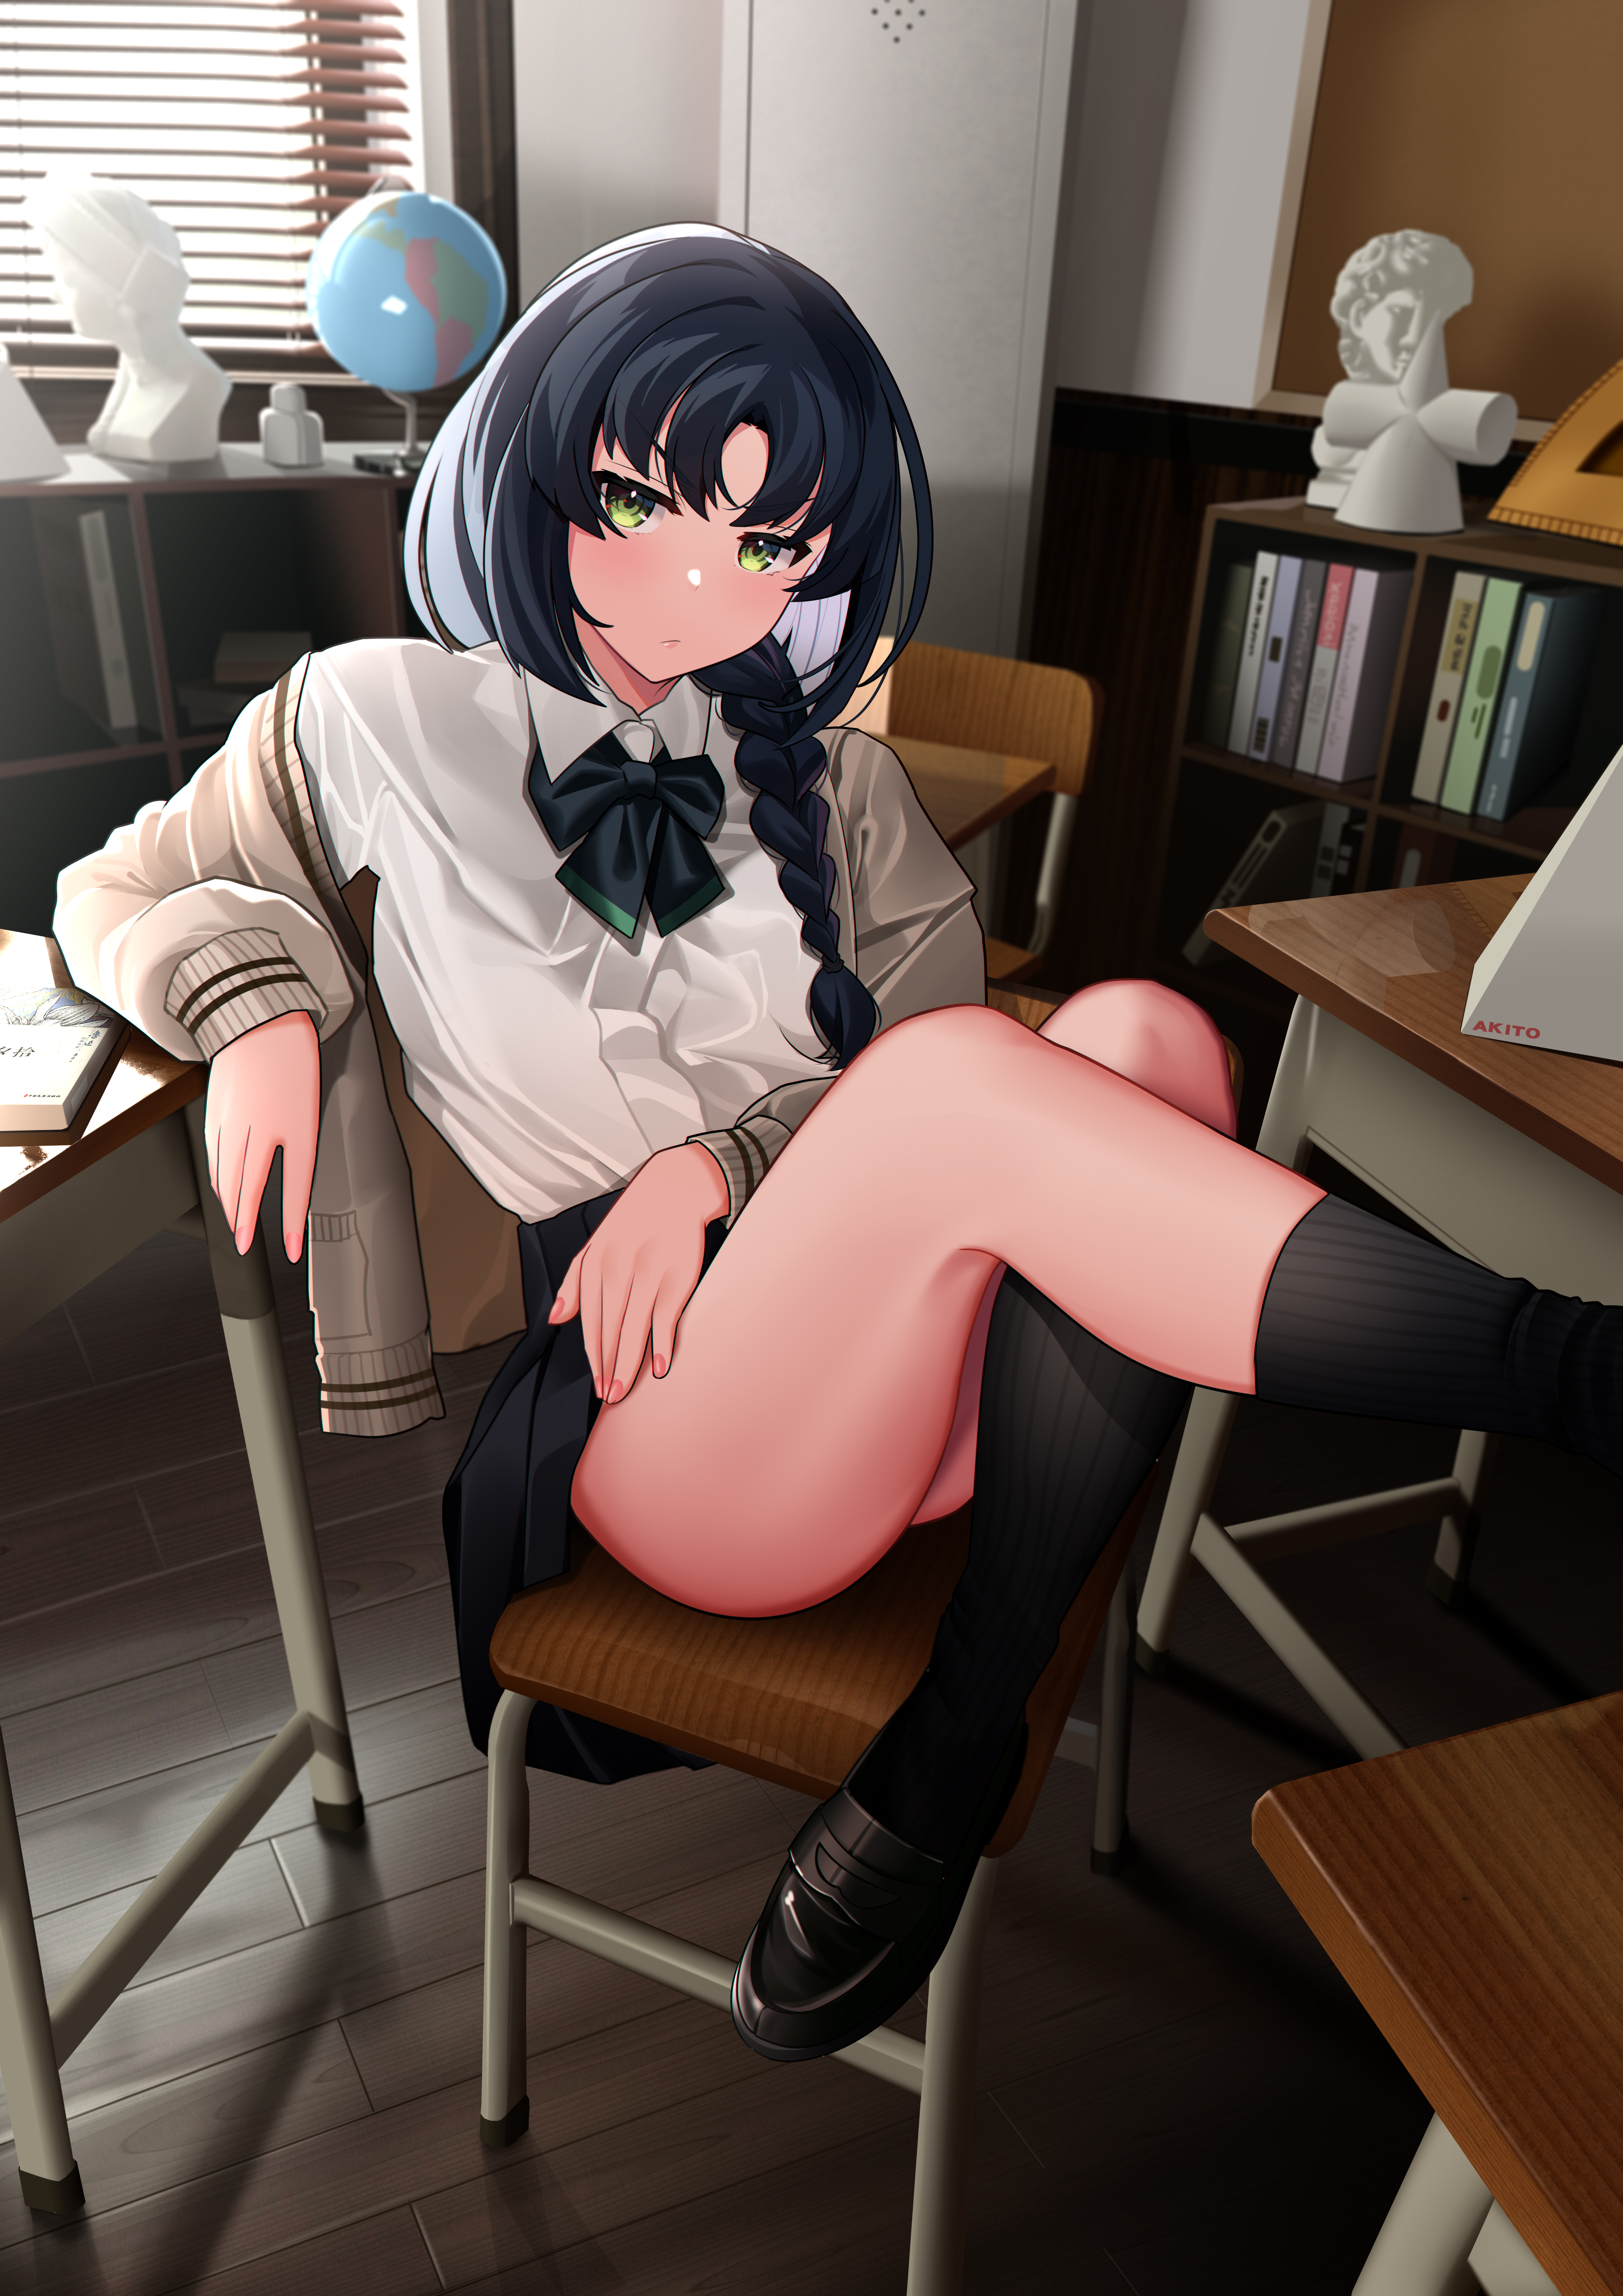 Anime 3307x4677 anime girls green eyes portrait display schoolgirl school uniform braided hair chair bow tie books thighs braids Pixiv